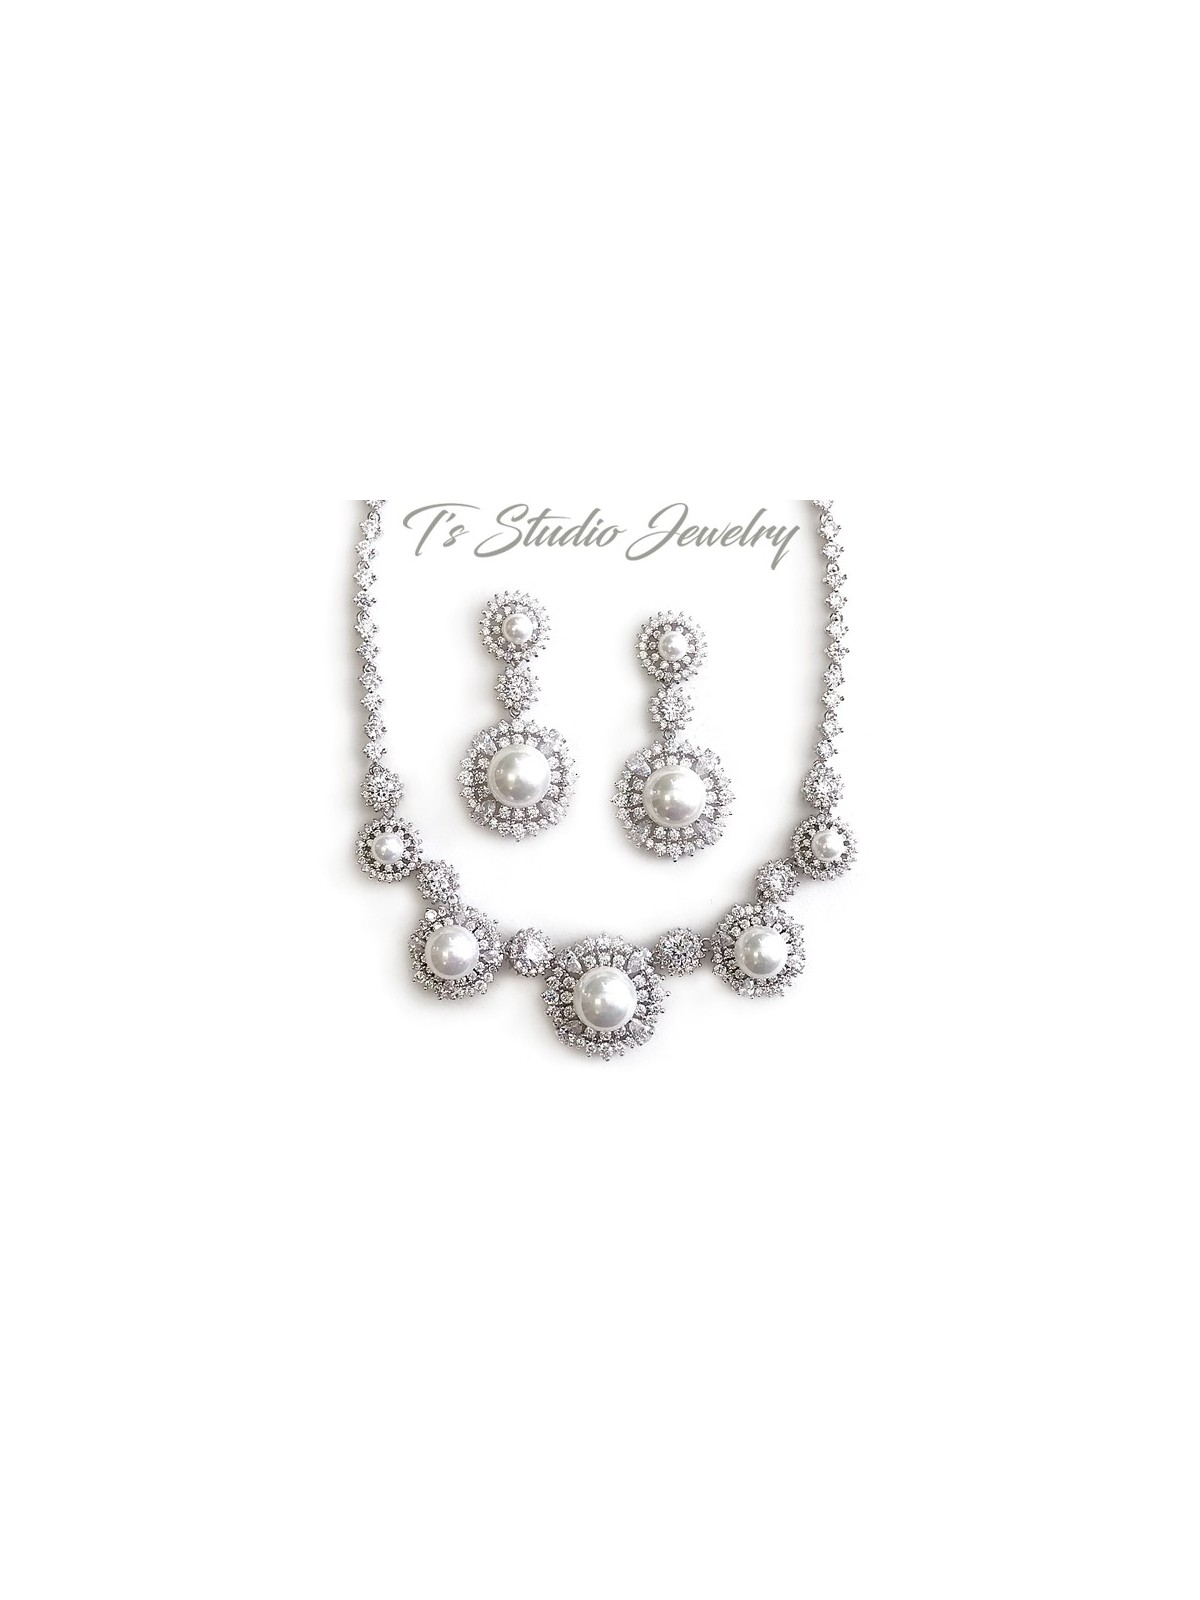 CZ & Pearl Drop Bridal Wedding Earrings